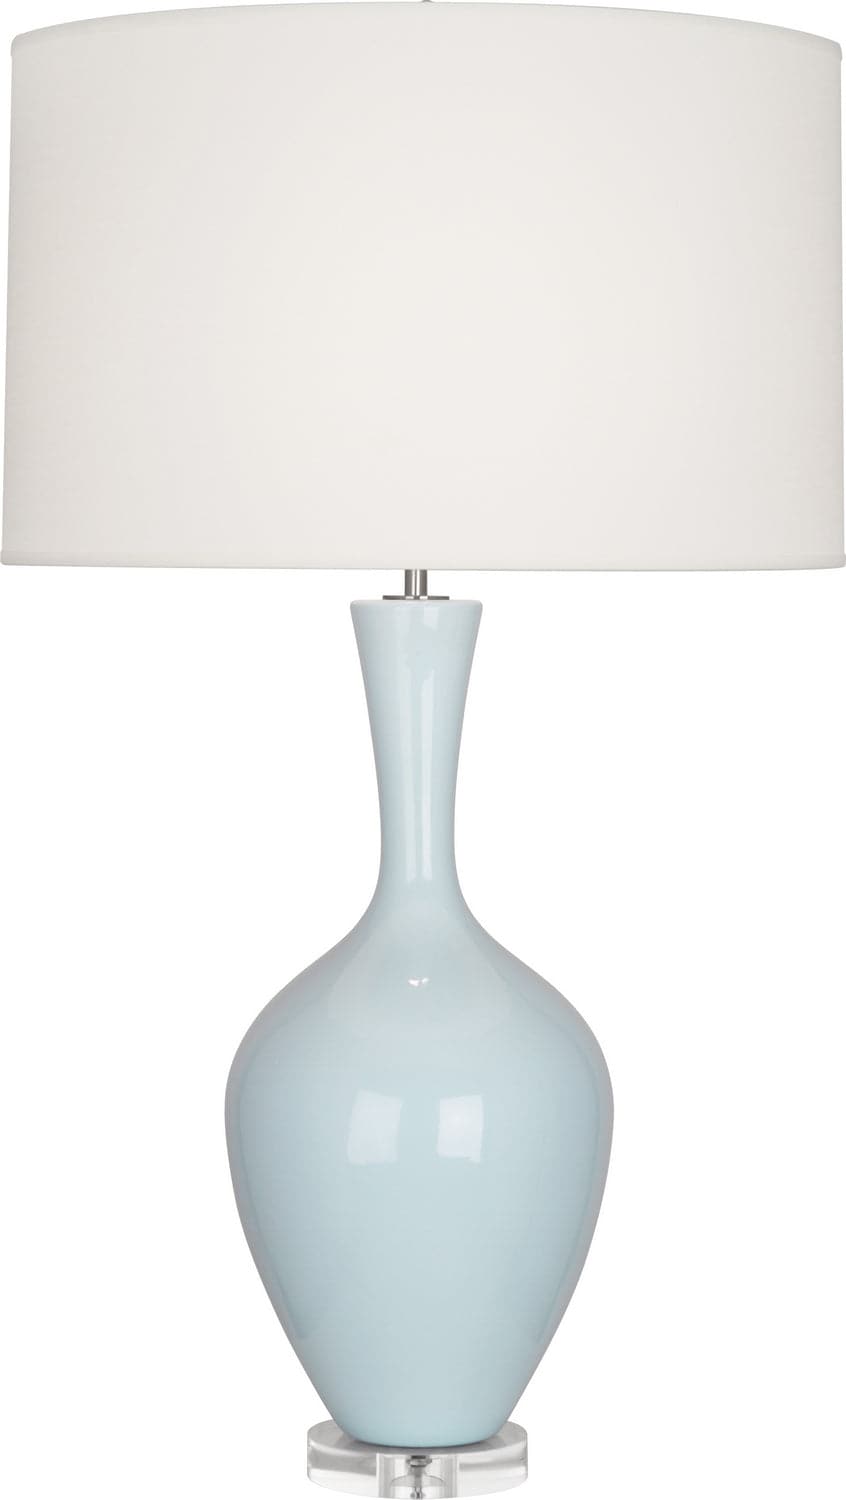 Robert Abbey - BB980 - One Light Table Lamp - Audrey - Baby Blue Glazed